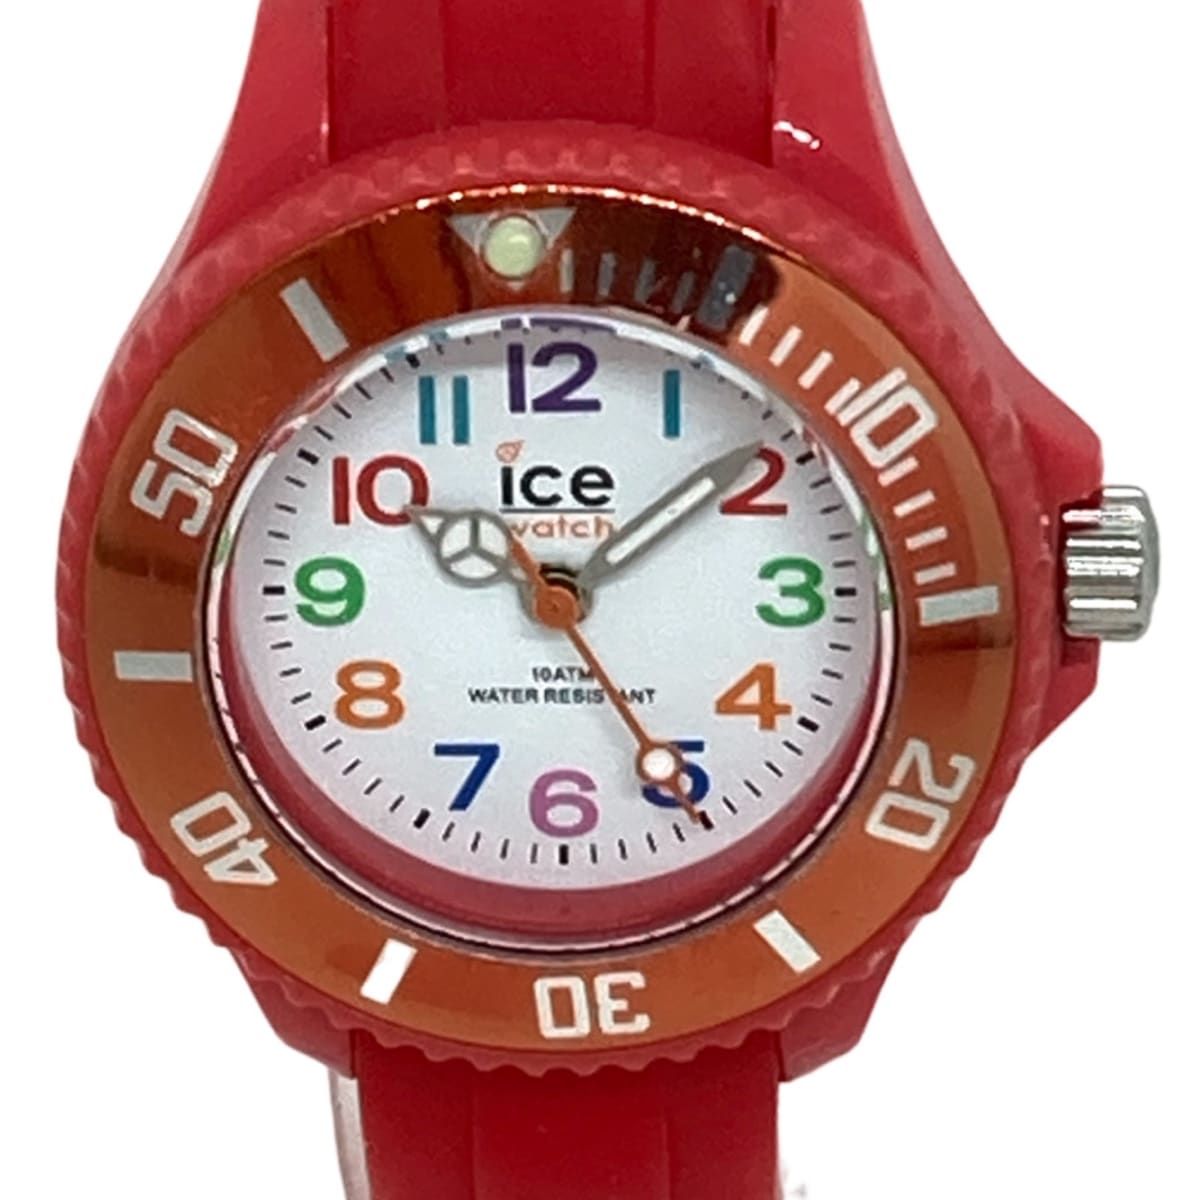 icewatch(アイスウォッチ) 腕時計 - MN.RD.M.S.12 レディース 白